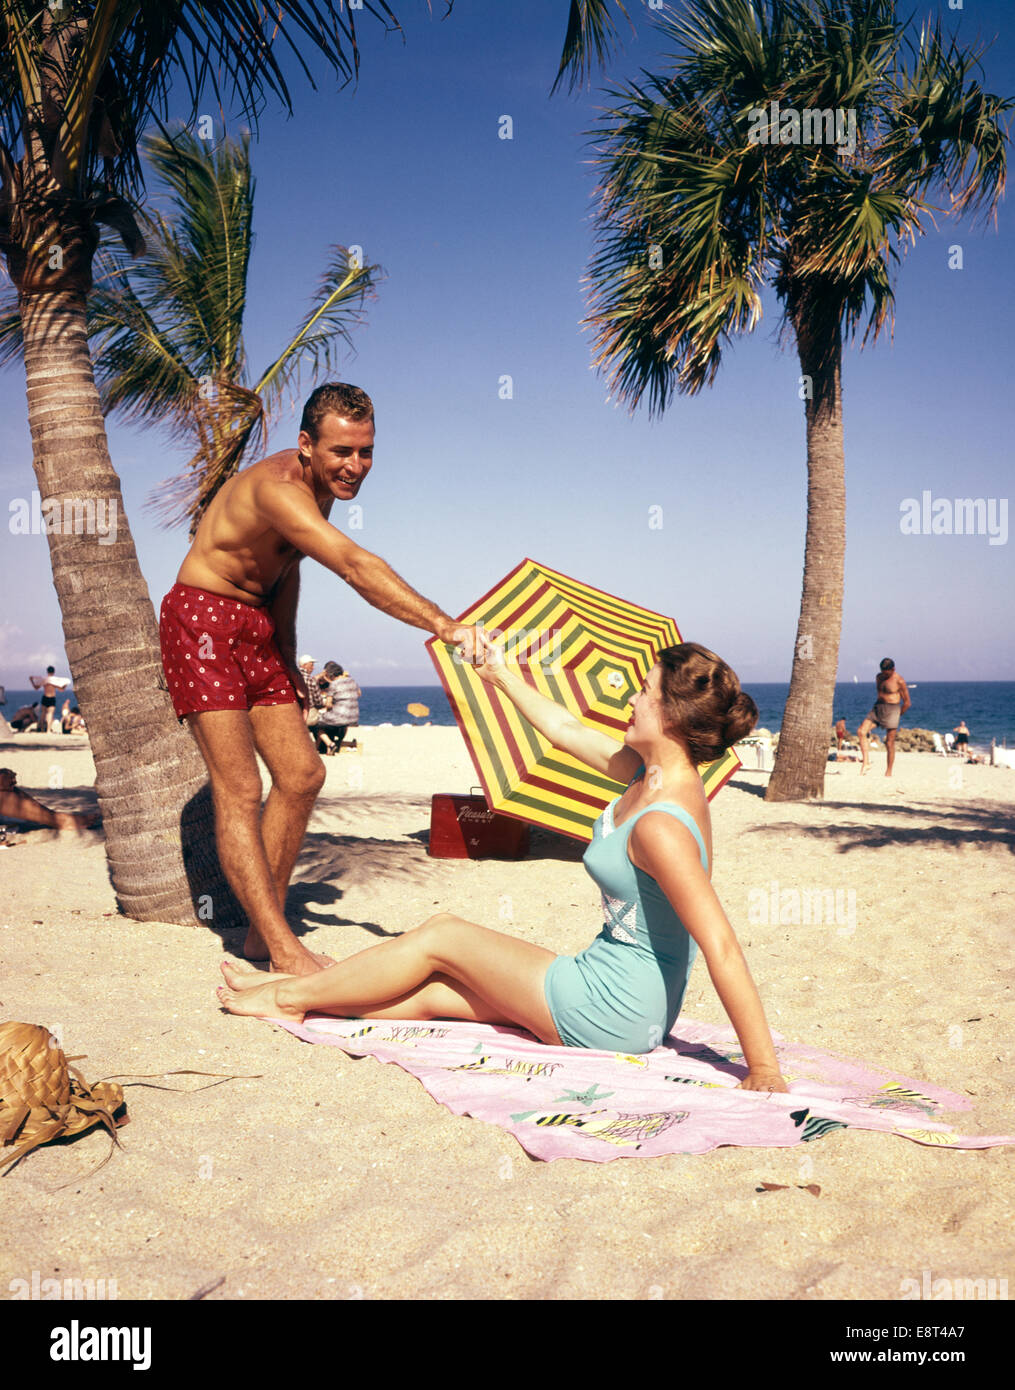 1960s 1950s COUPLE ON TROPICAL BEACH Stock Photo